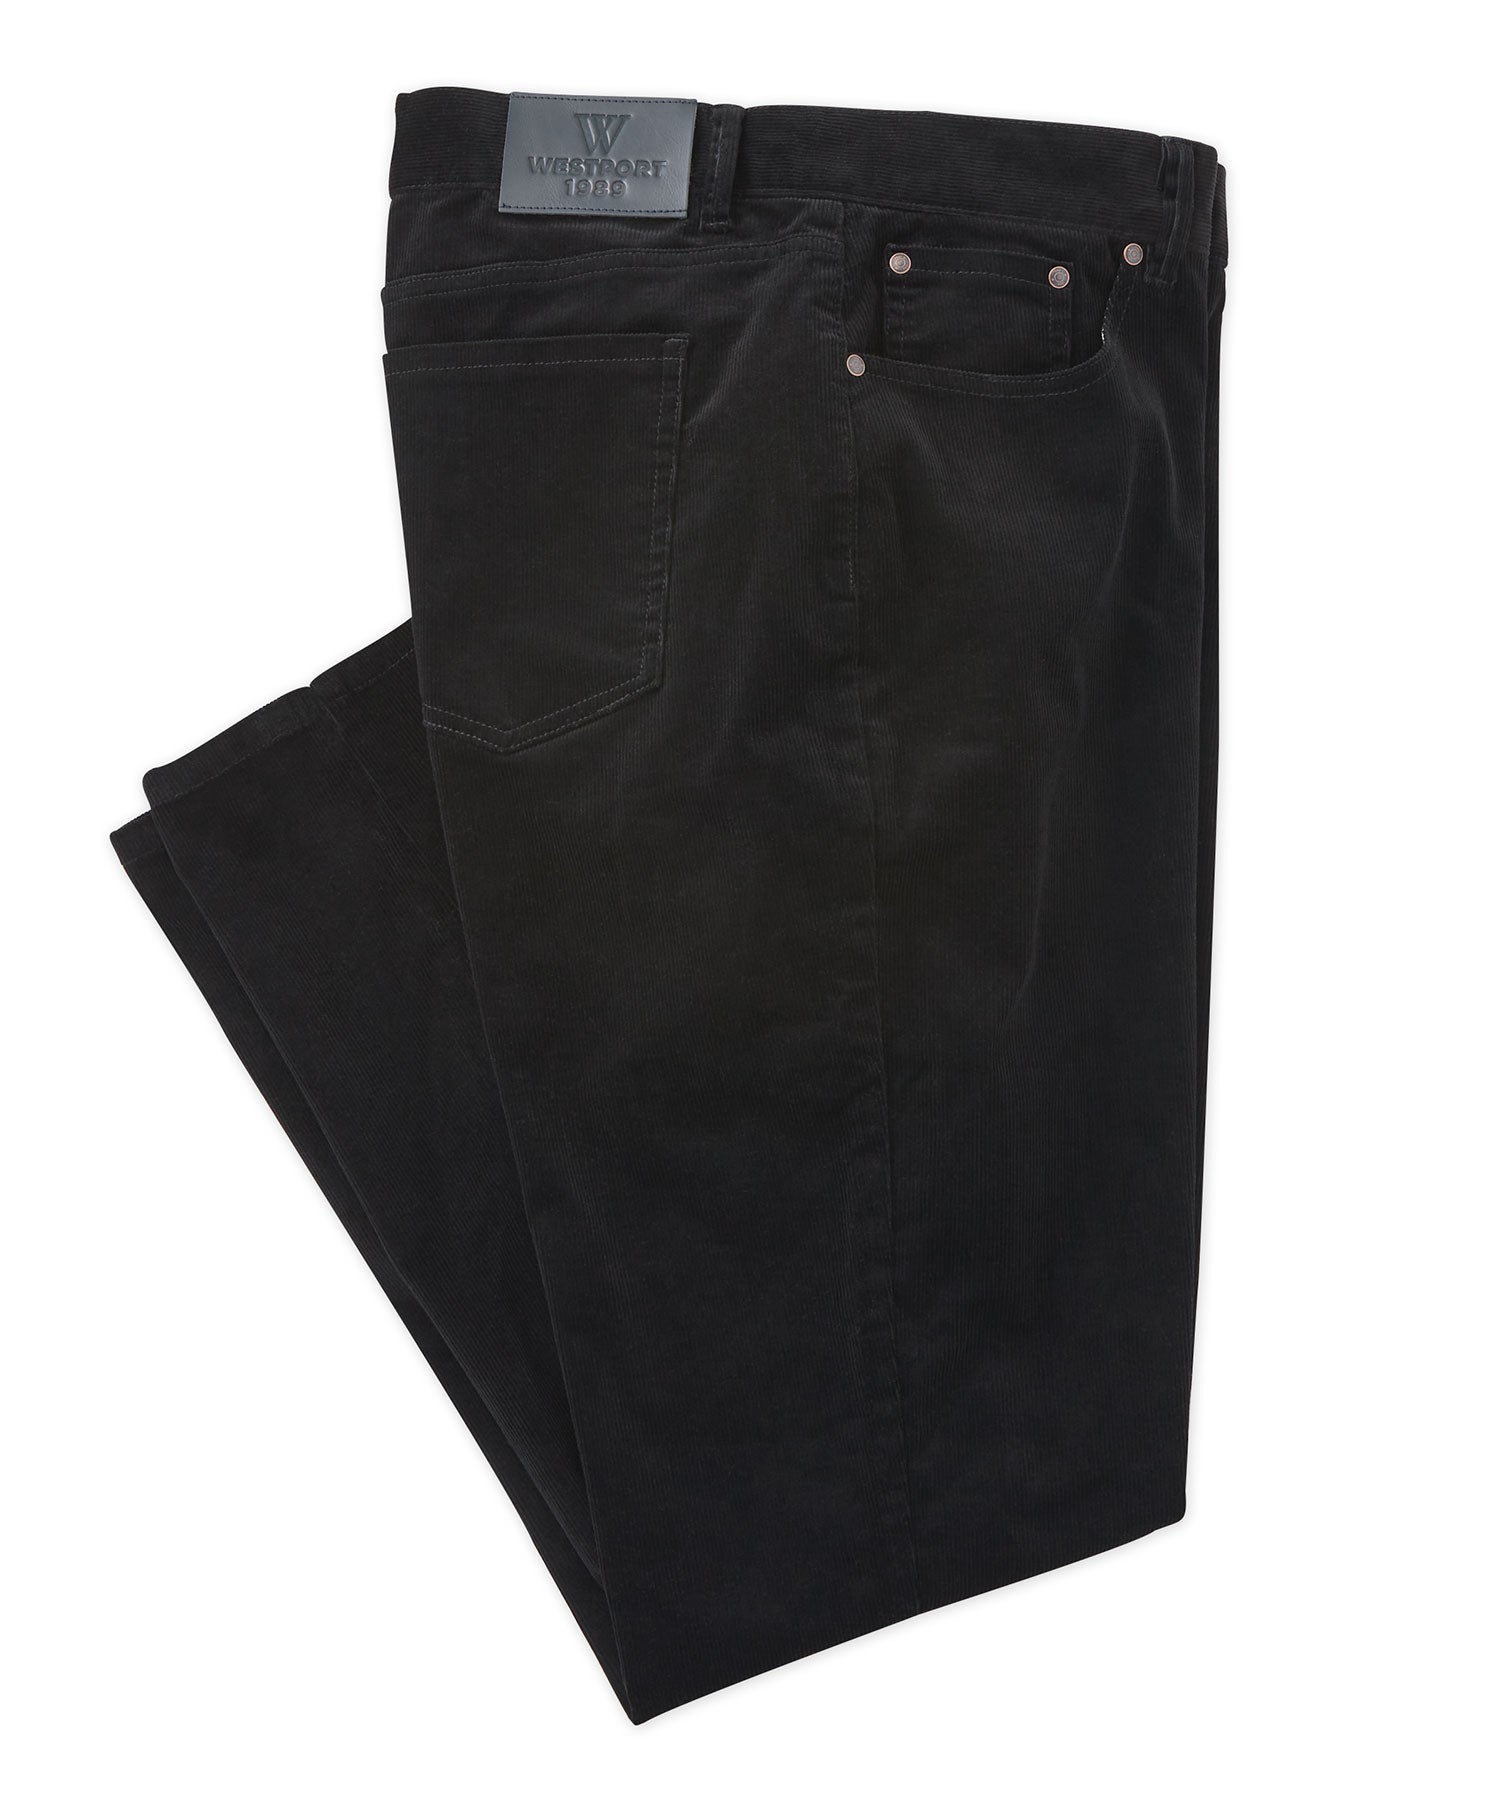 Westport Black Garment Dyed Five Pocket Stretch Twill Pant